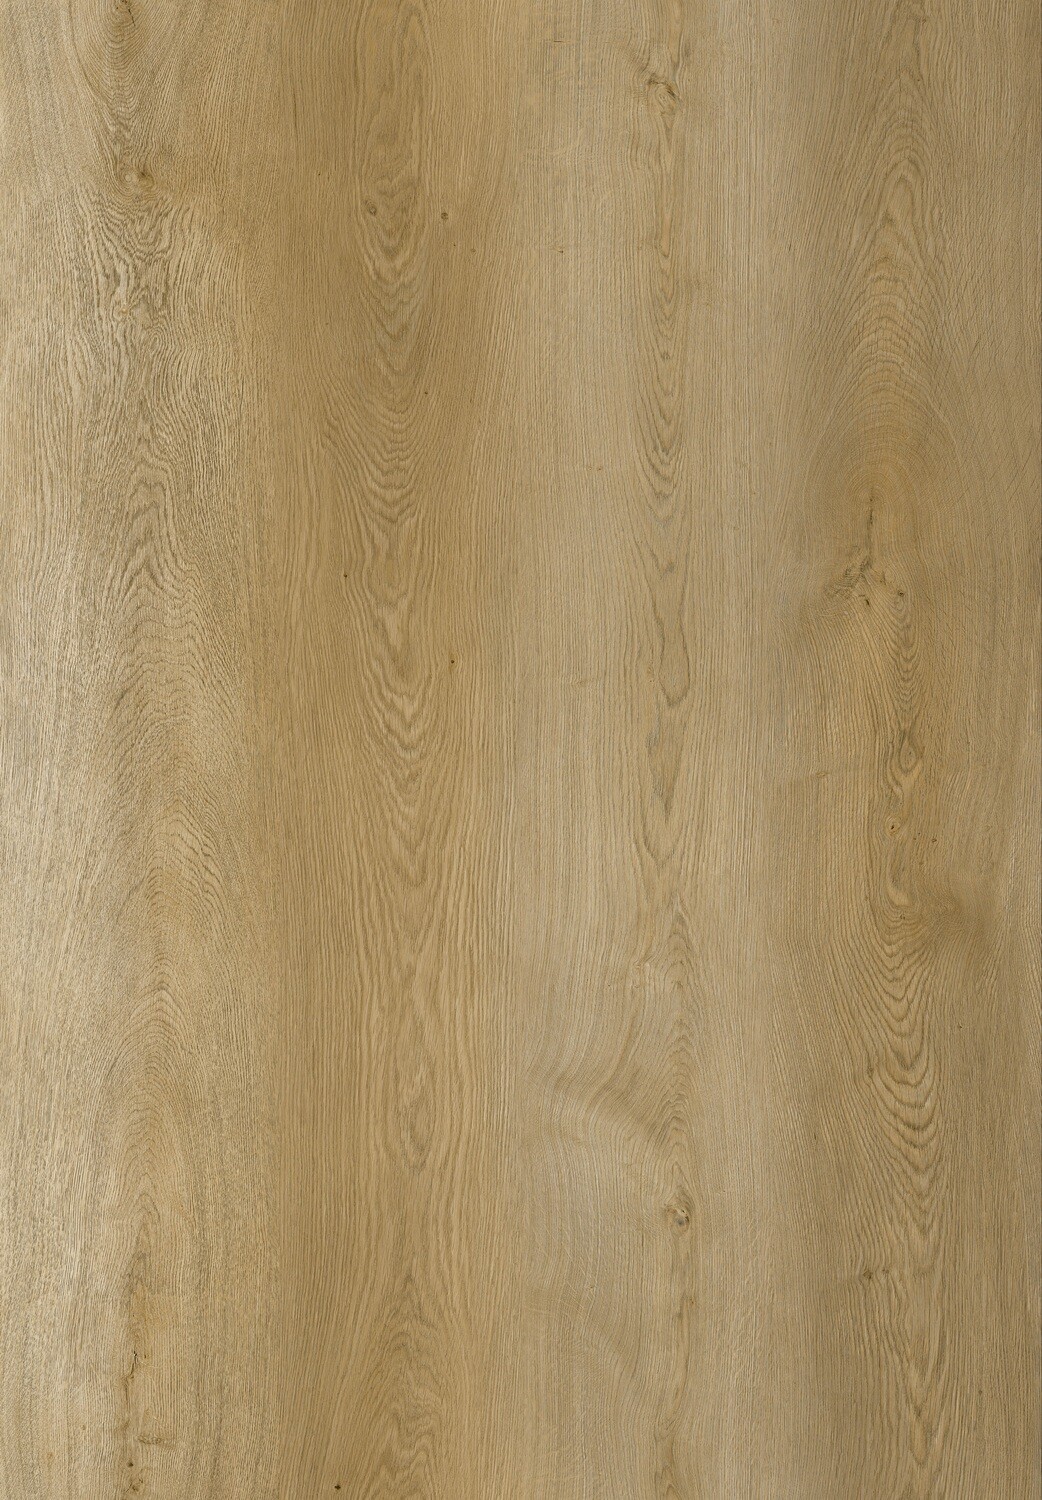 Vinylboden Light Majestic Oak mit Trittschall 1.5mm pro 1m² Stärke 8mm x 220mm x 1840mm